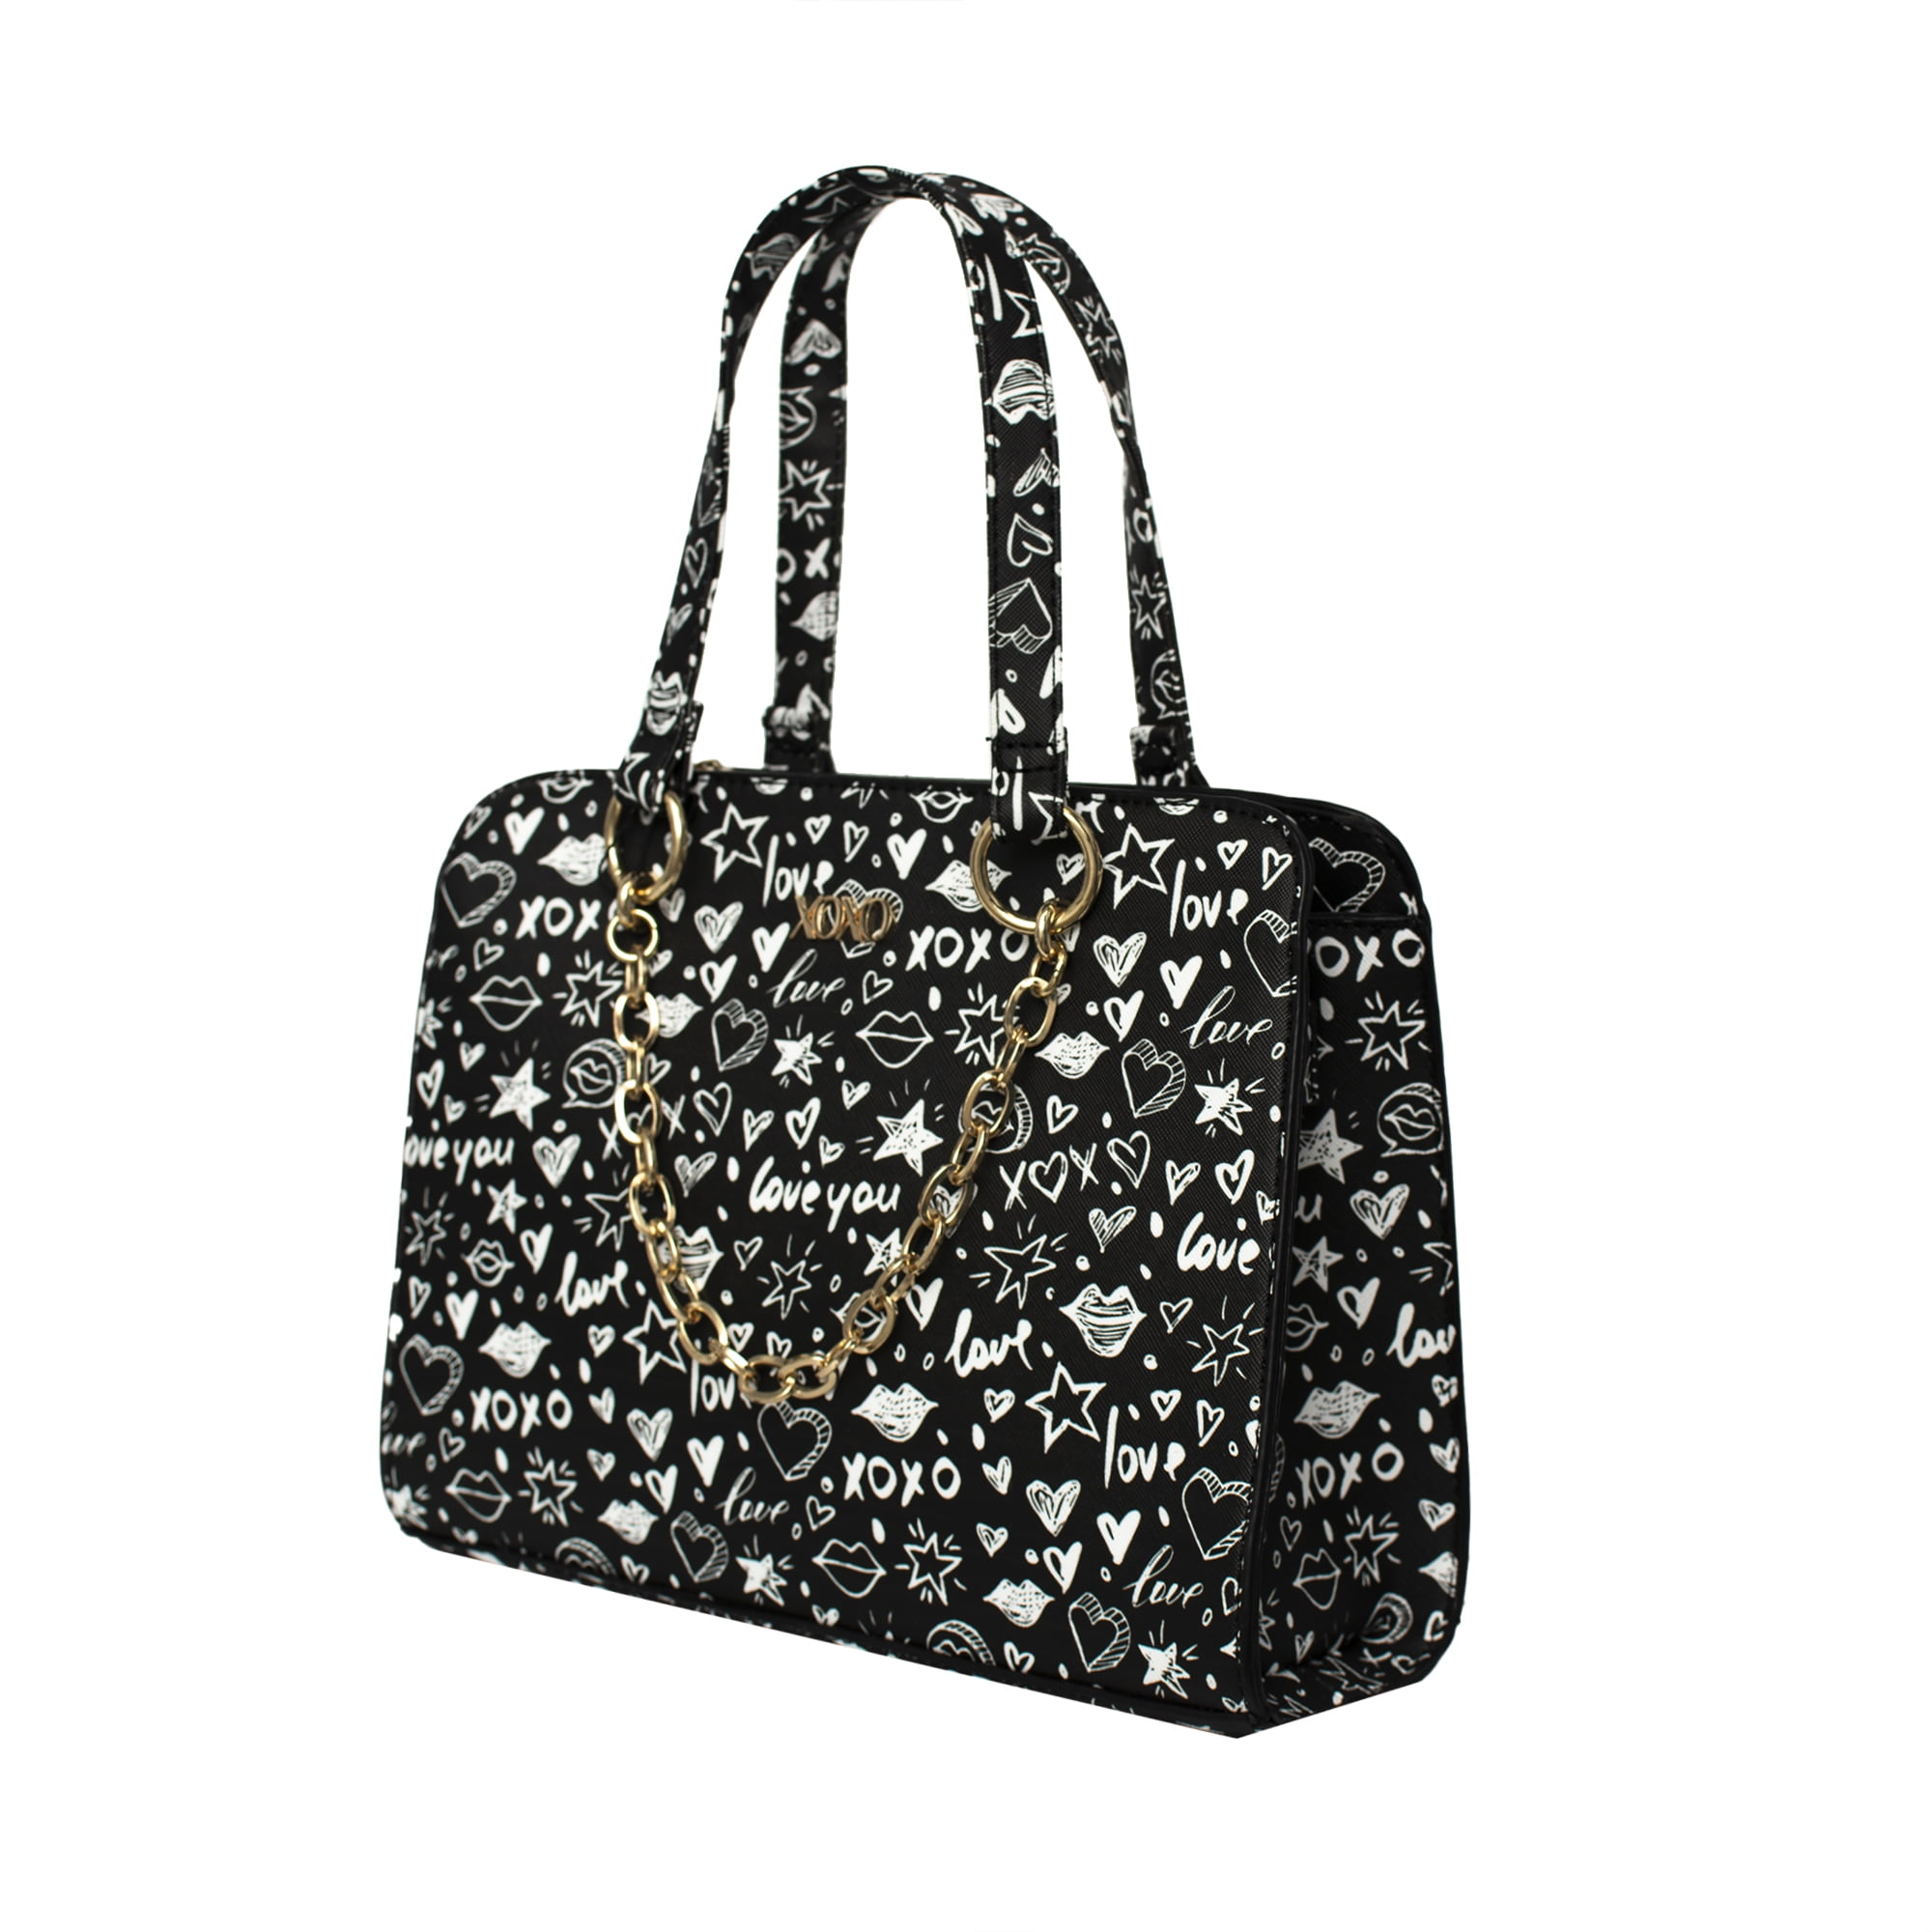 Xoxo black cherry purse | Purses, Black, Xoxo